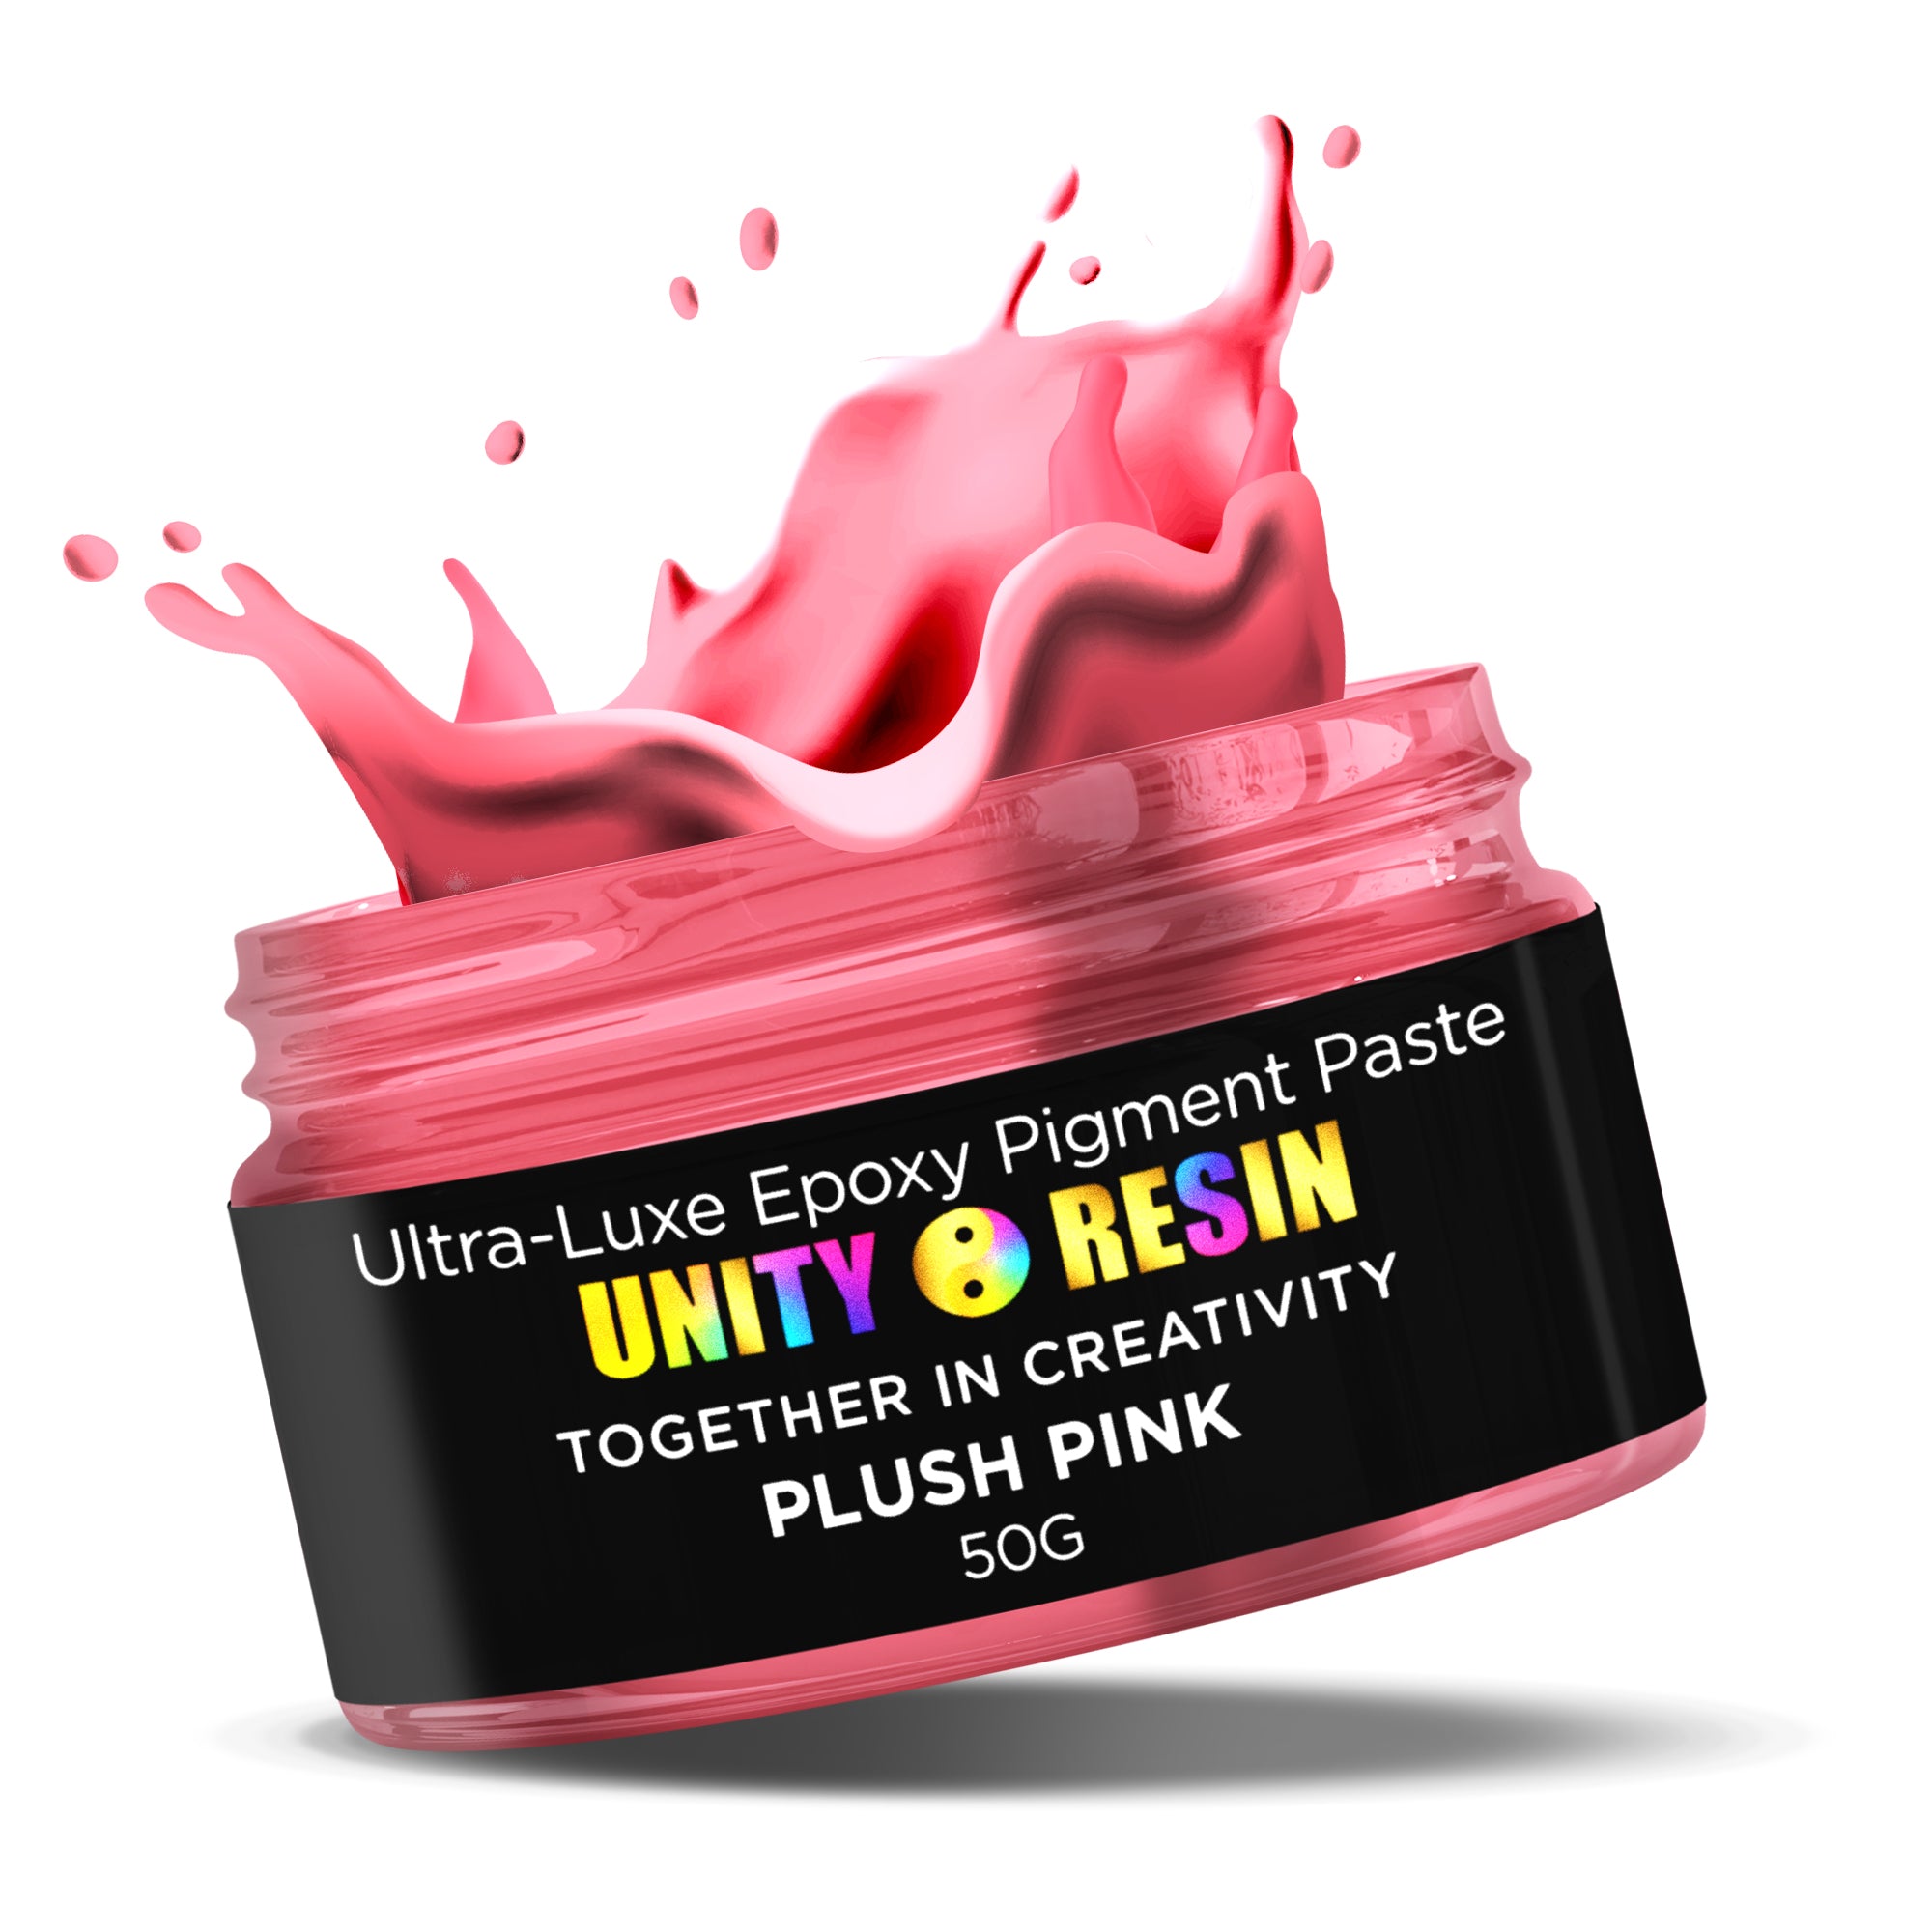 Ultra-Luxe Epoxy Resin Pigment Paste- GLITTER SPARKLE BLAST-MOONSTONE (50G)